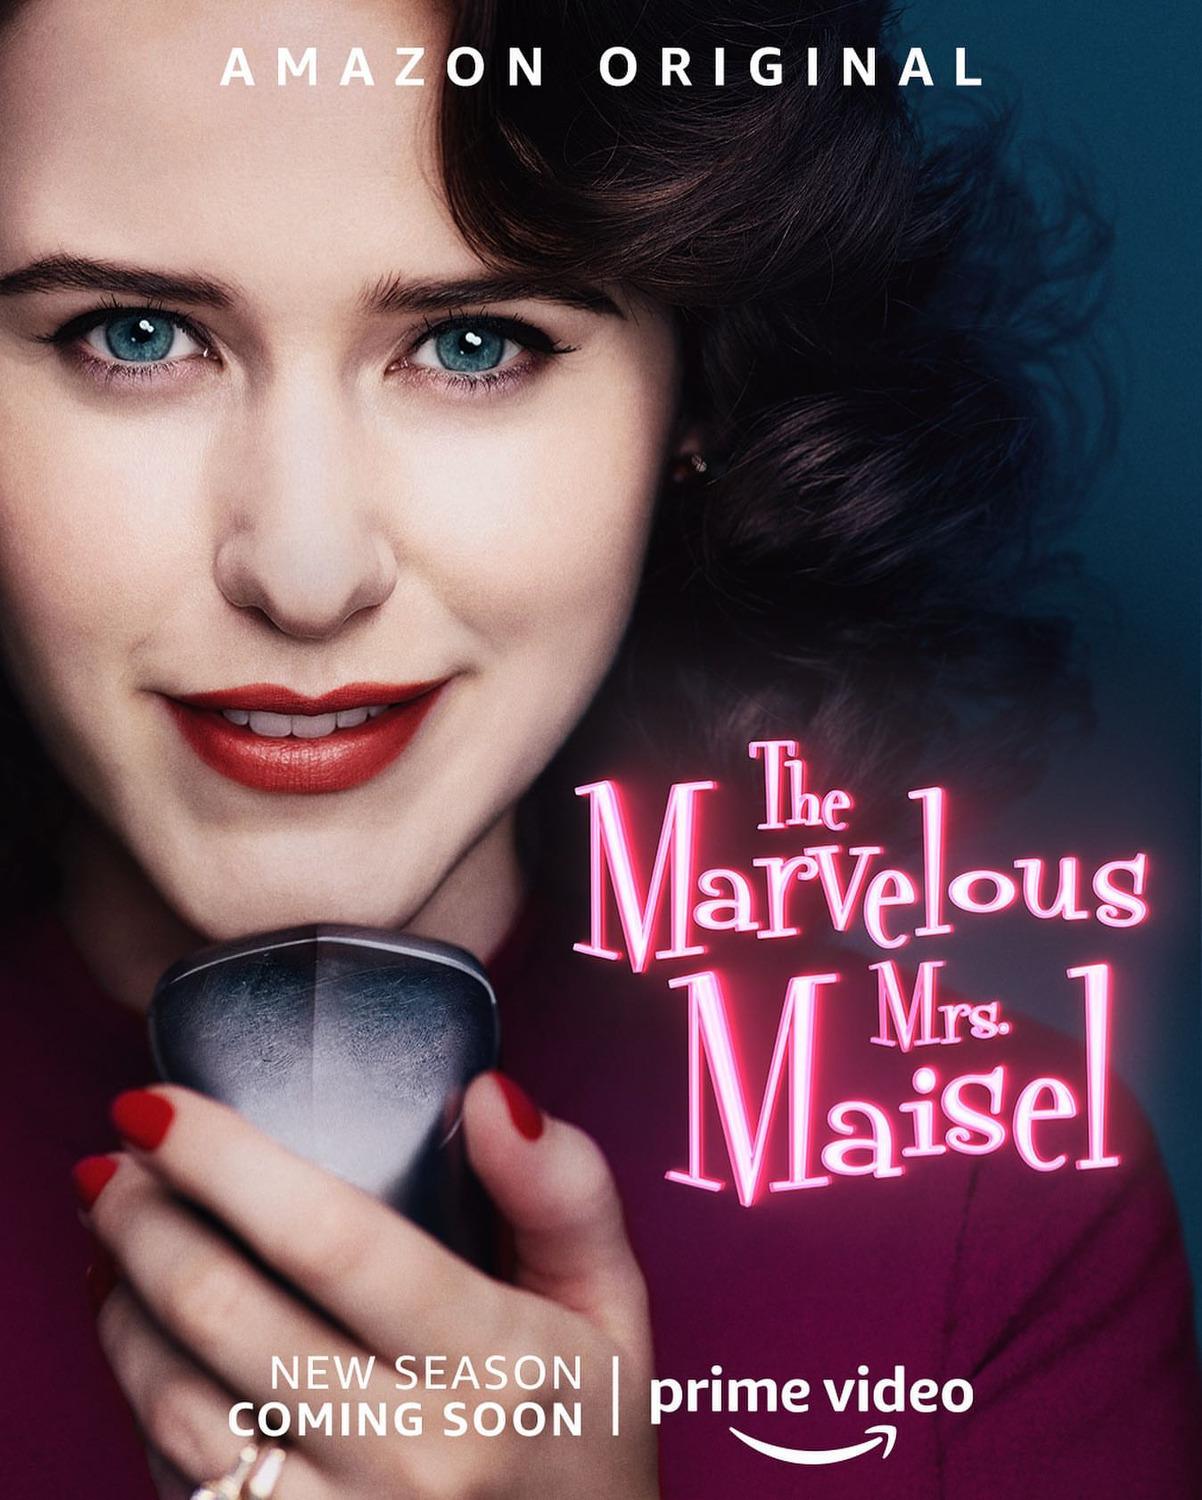 The Marvelous Mrs. Maisel Amy Sherman-Palladino Season 4 Art Print 24x36" 27x40" - $10.90 - $24.90